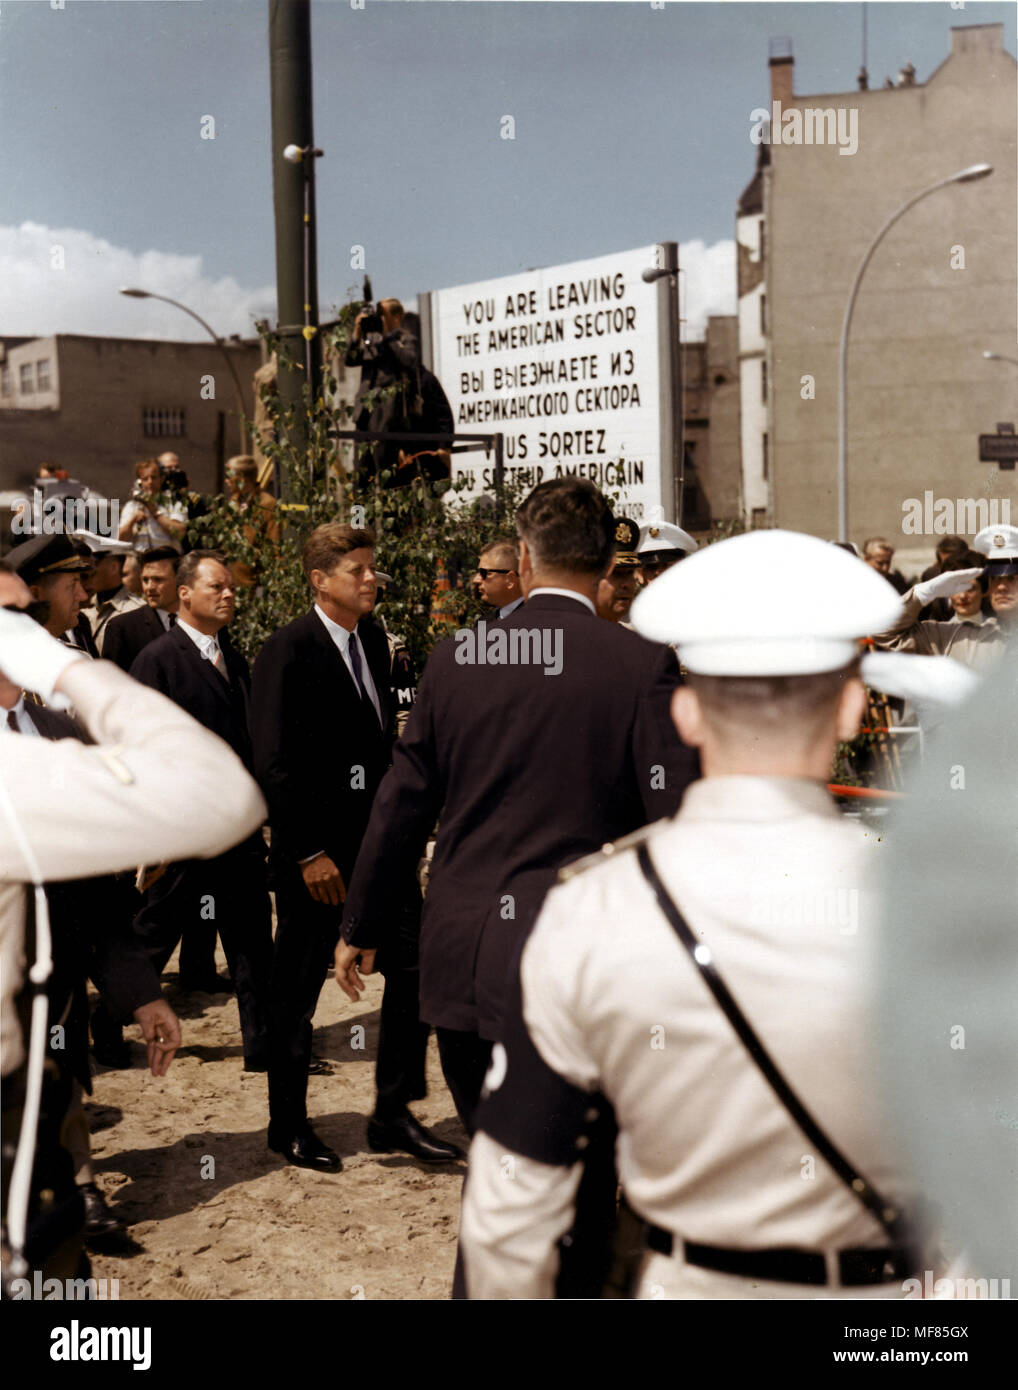 1963 Art print POSTER President Kennedy gives an address in West Berlin,June 26